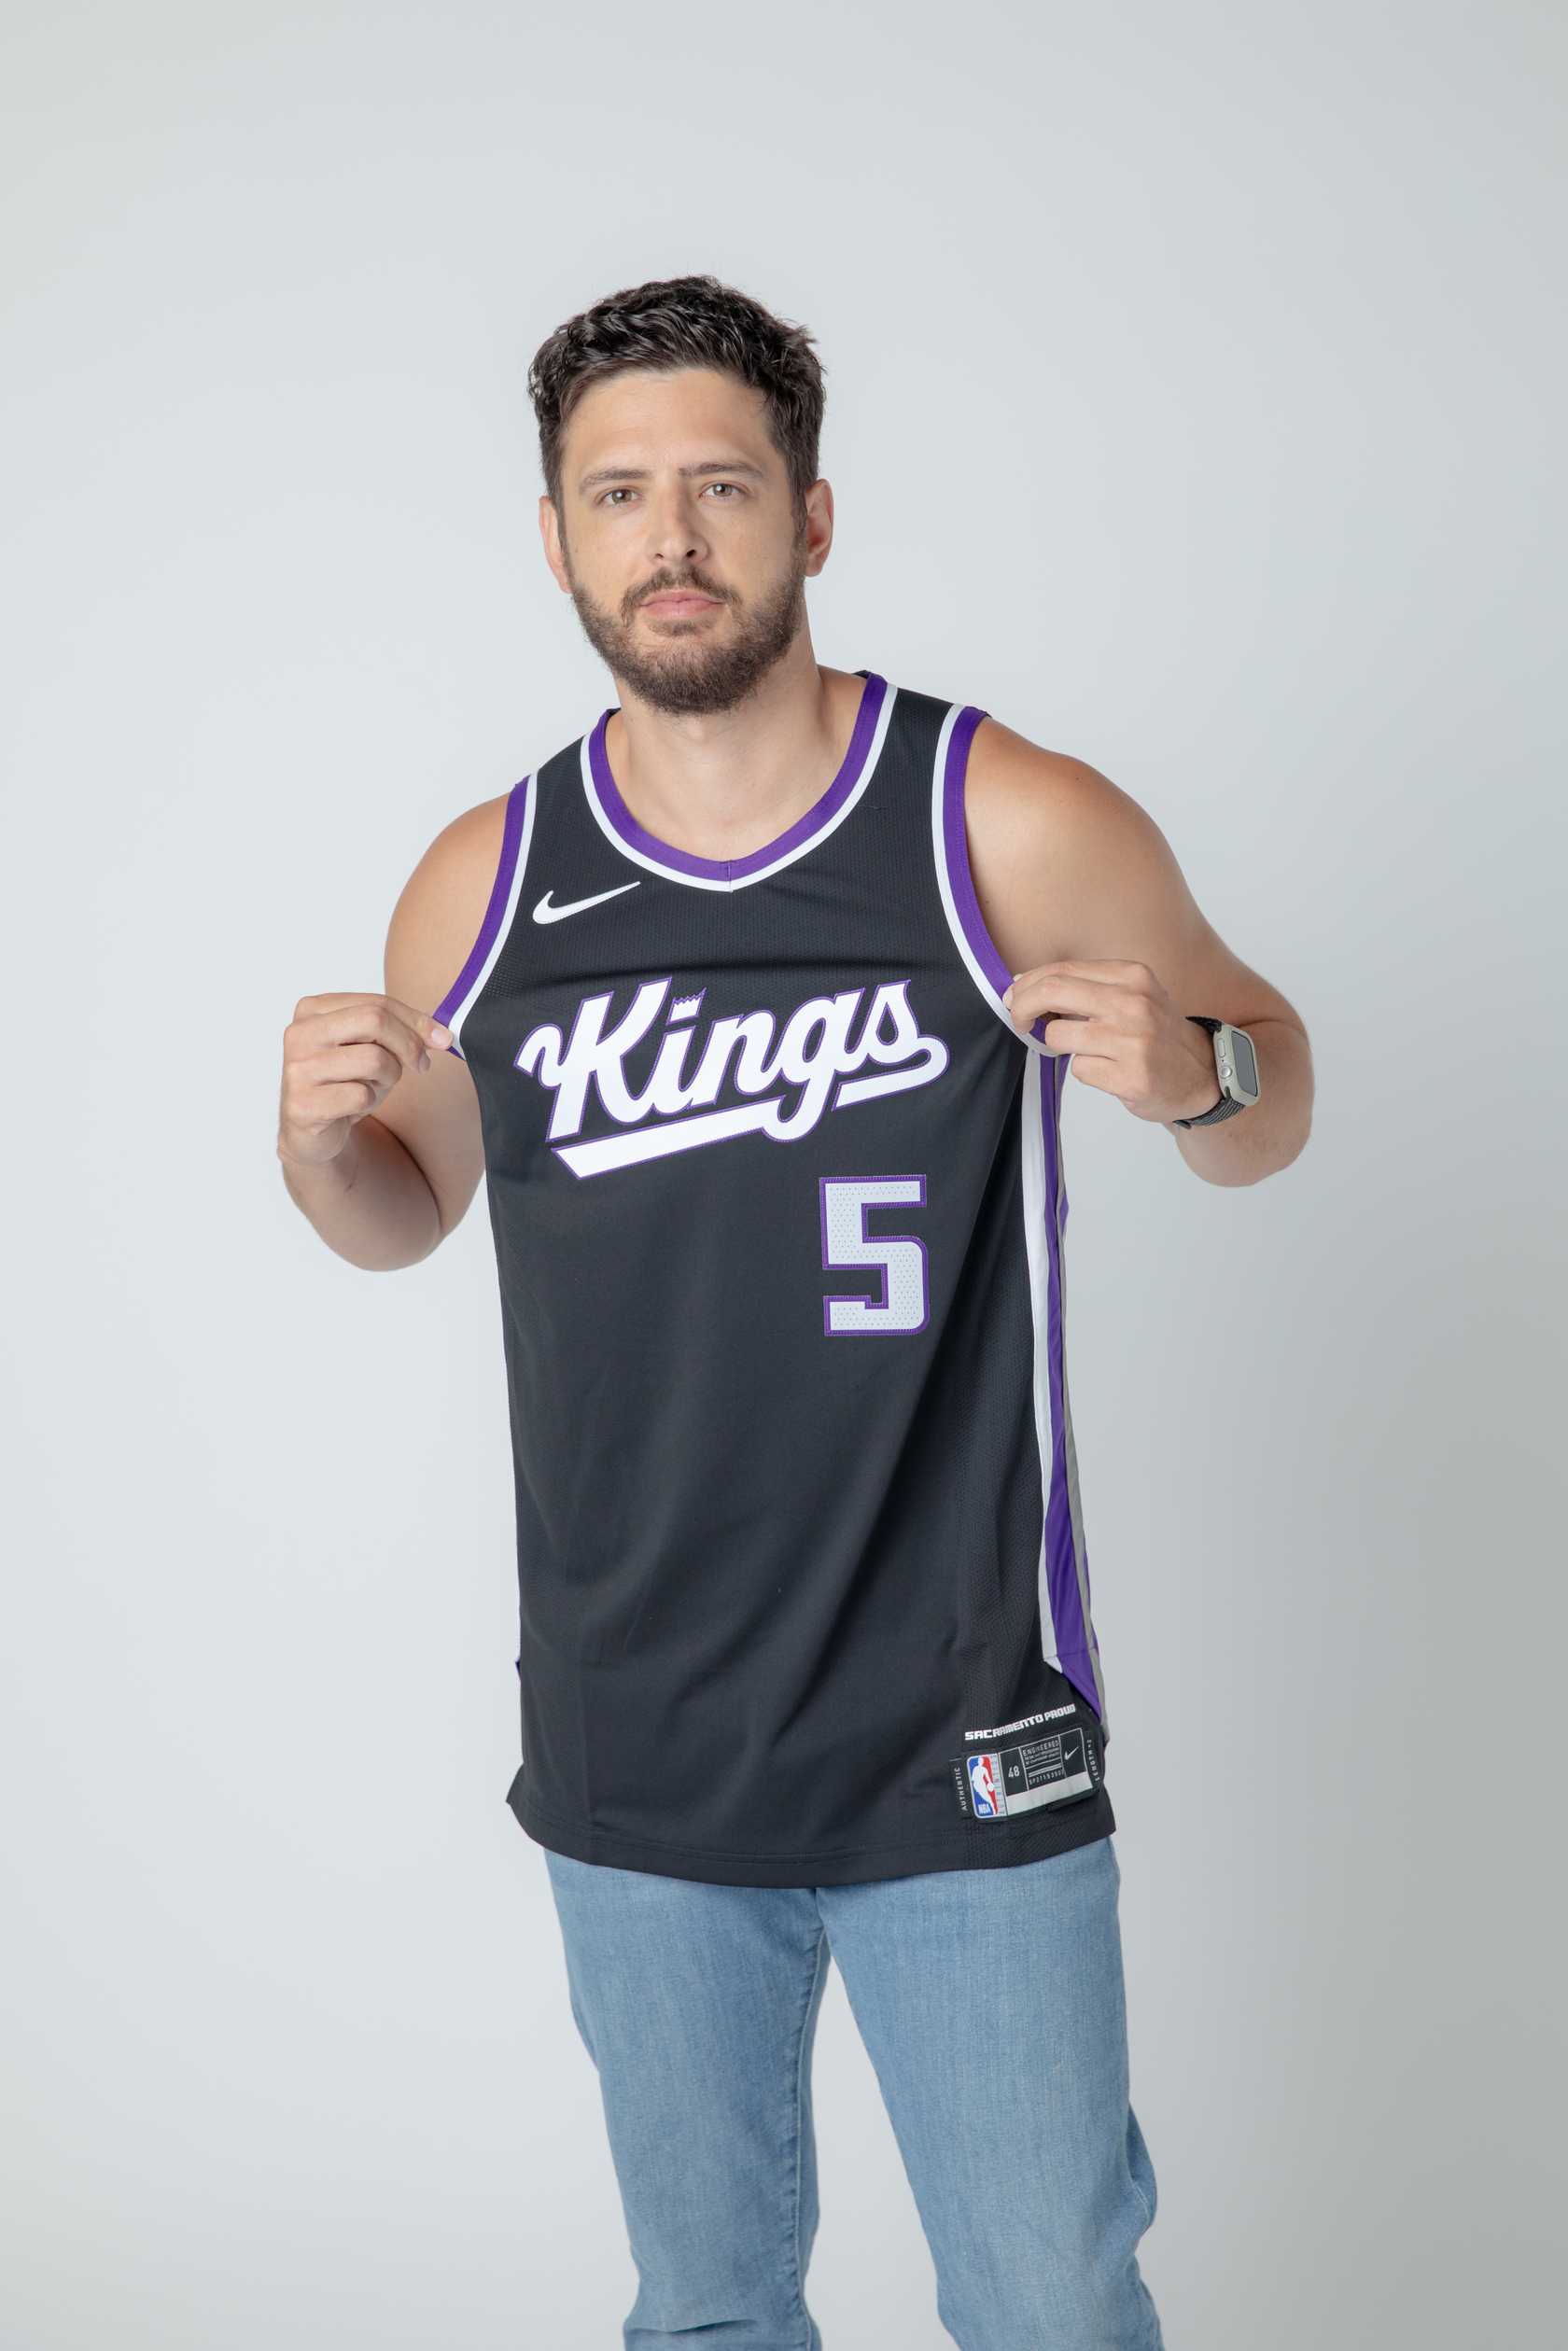 Sacramento Kings unveil new jerseys for 2023-24 Season - The Kings Herald